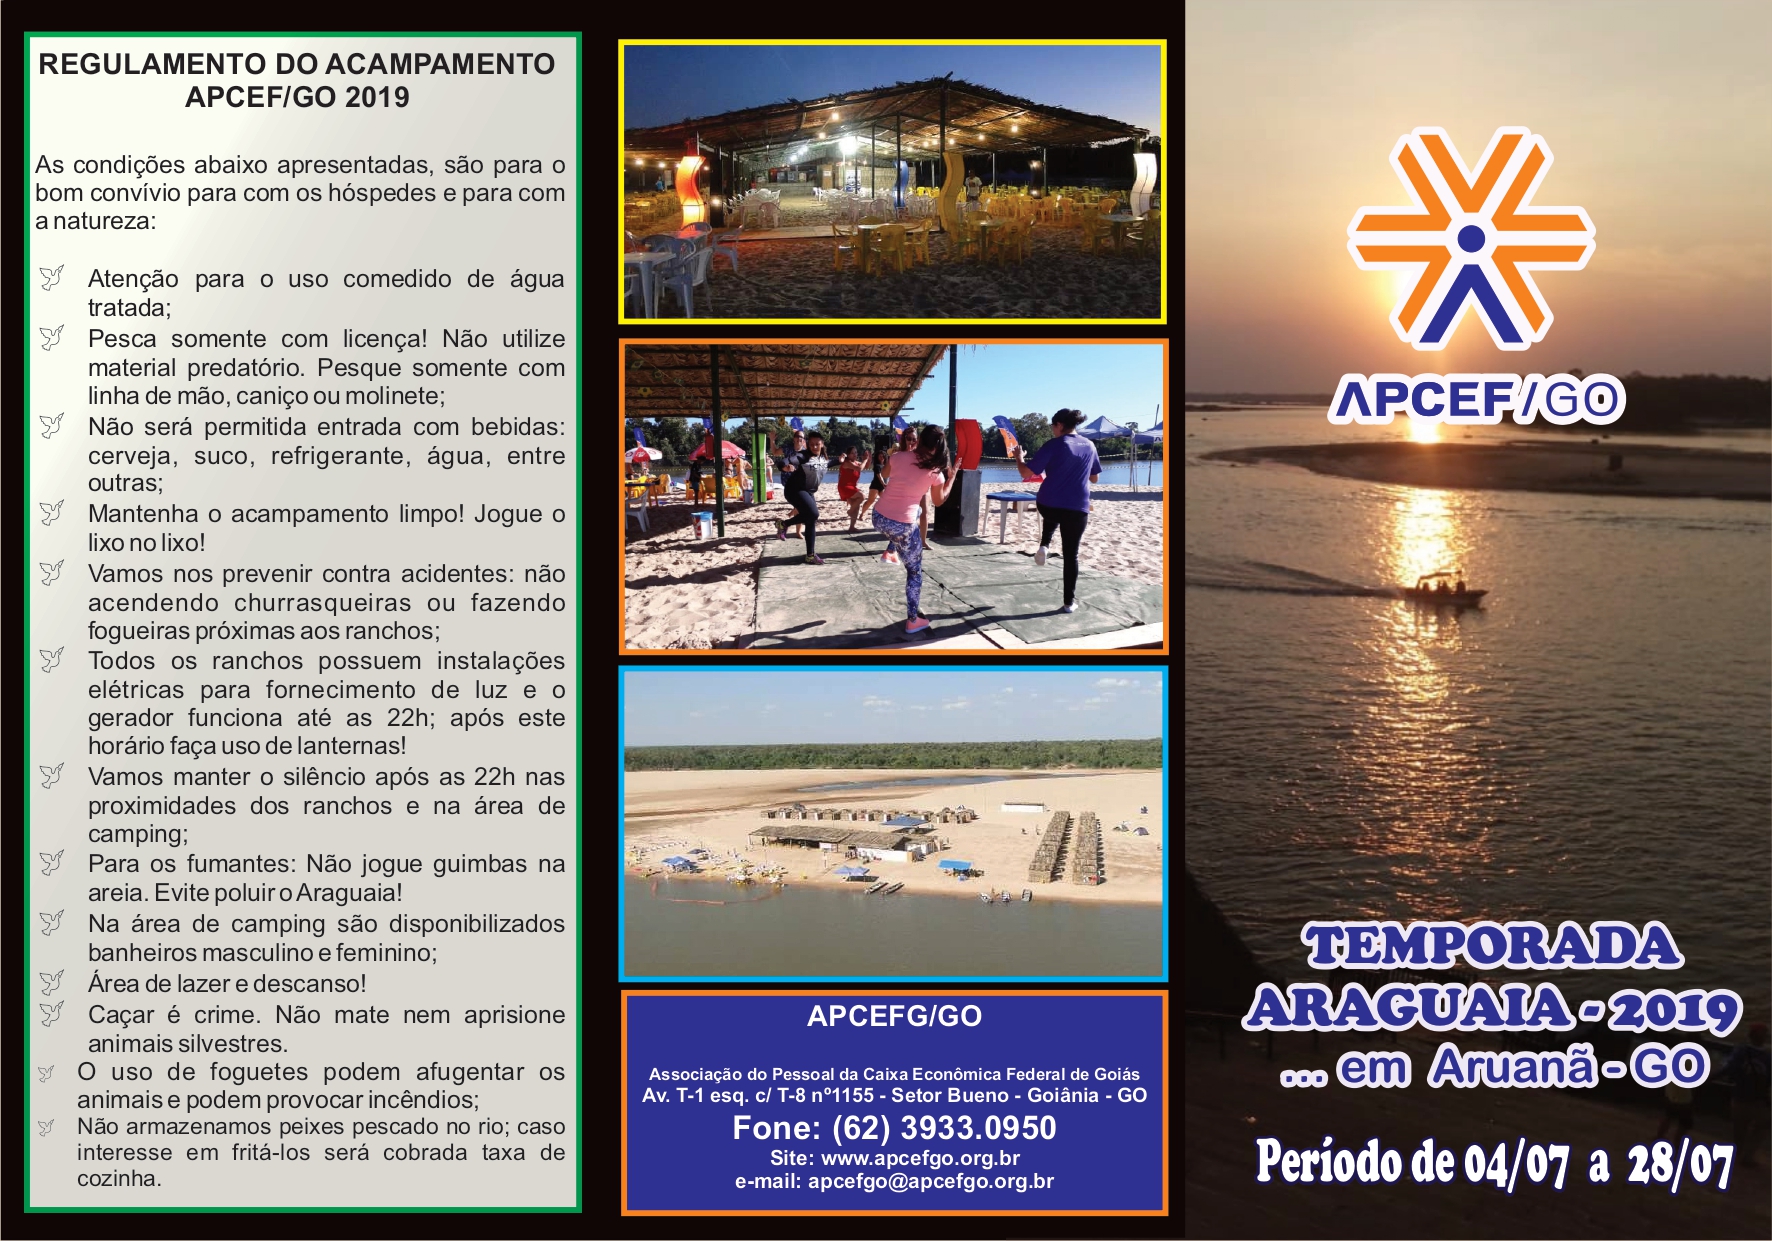 FOLDER ARAGUAIA 2019  DEFINITIVO 5_page-0001.jpg